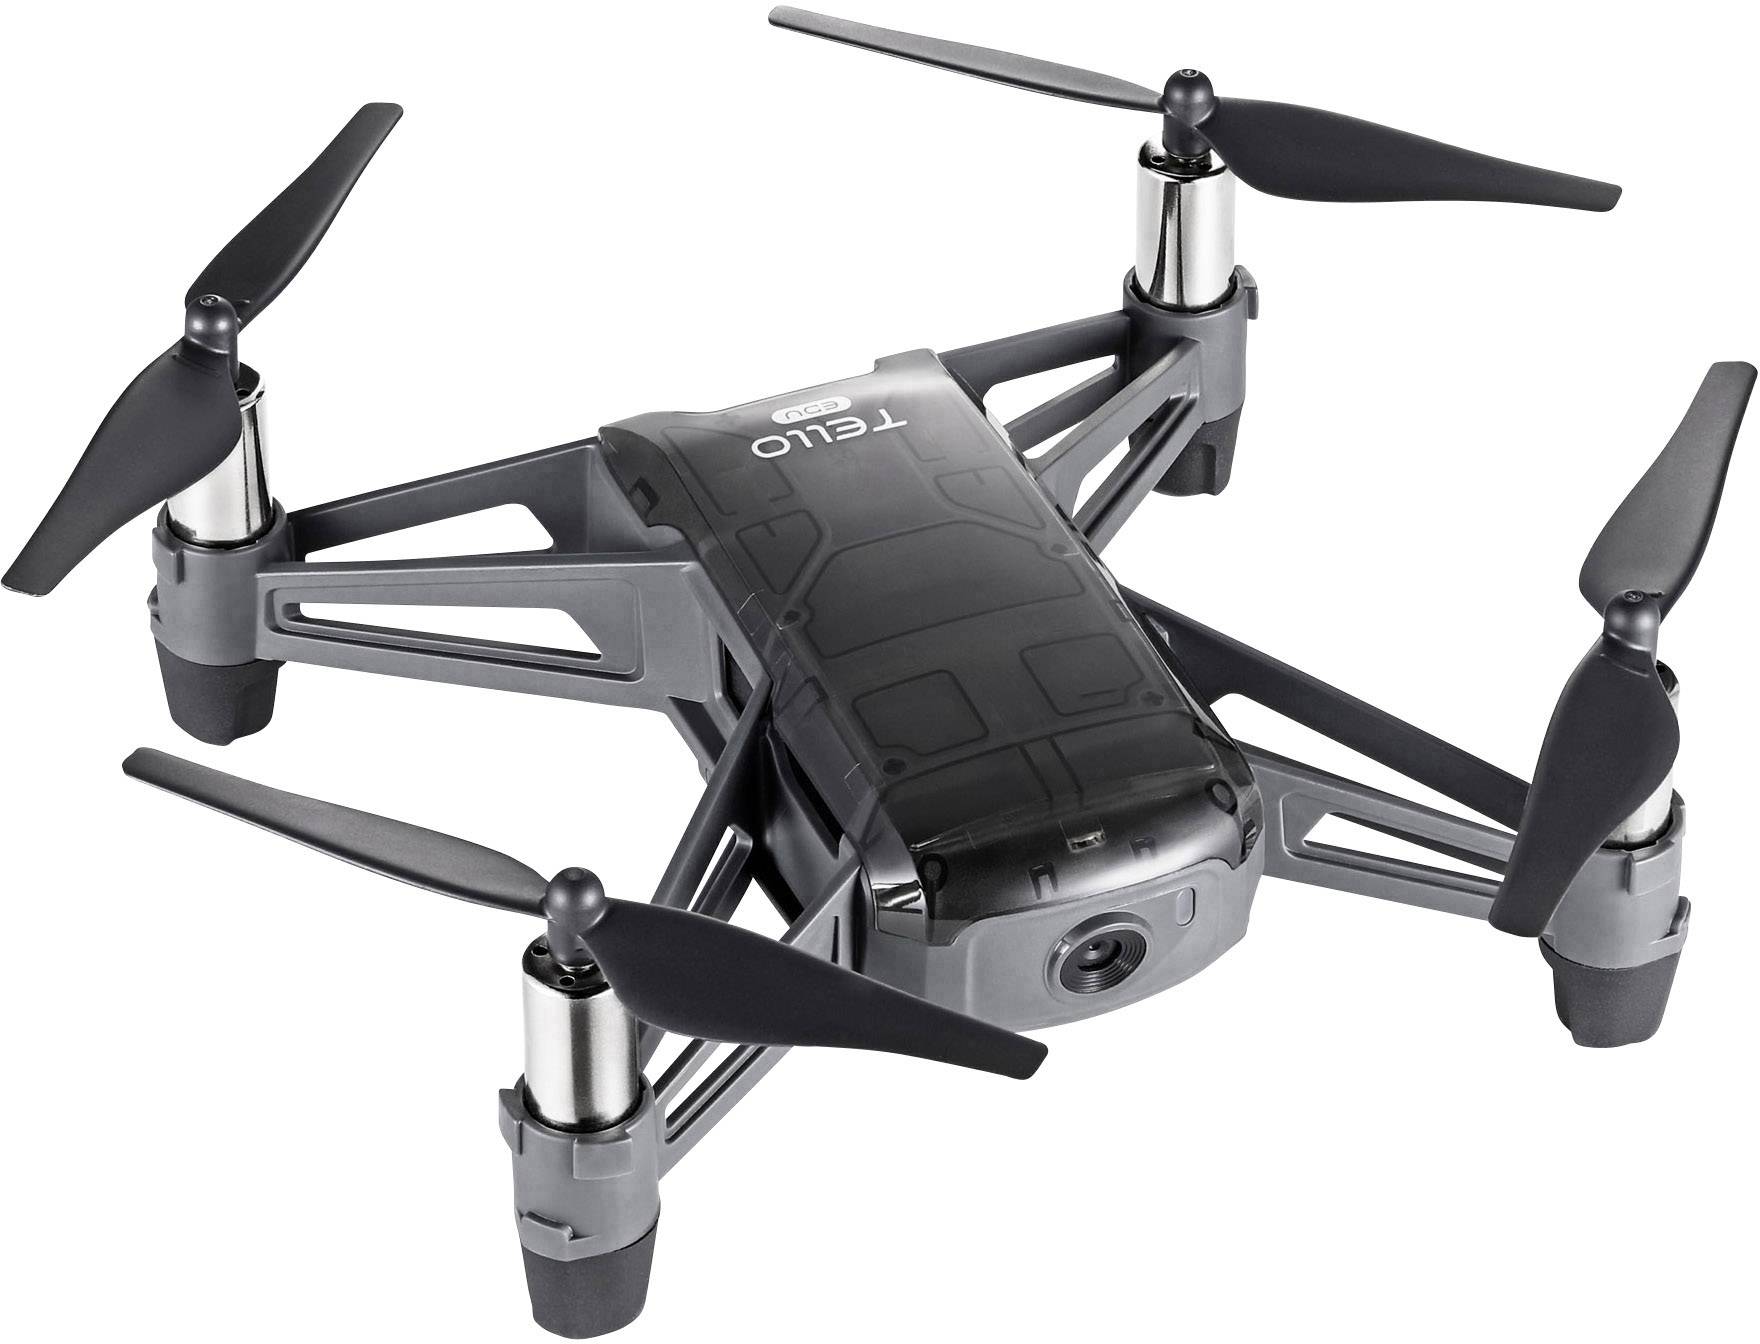 Ryze Tech Tello EDU Drone quadricoptère prêt à voler (RtF) prises de